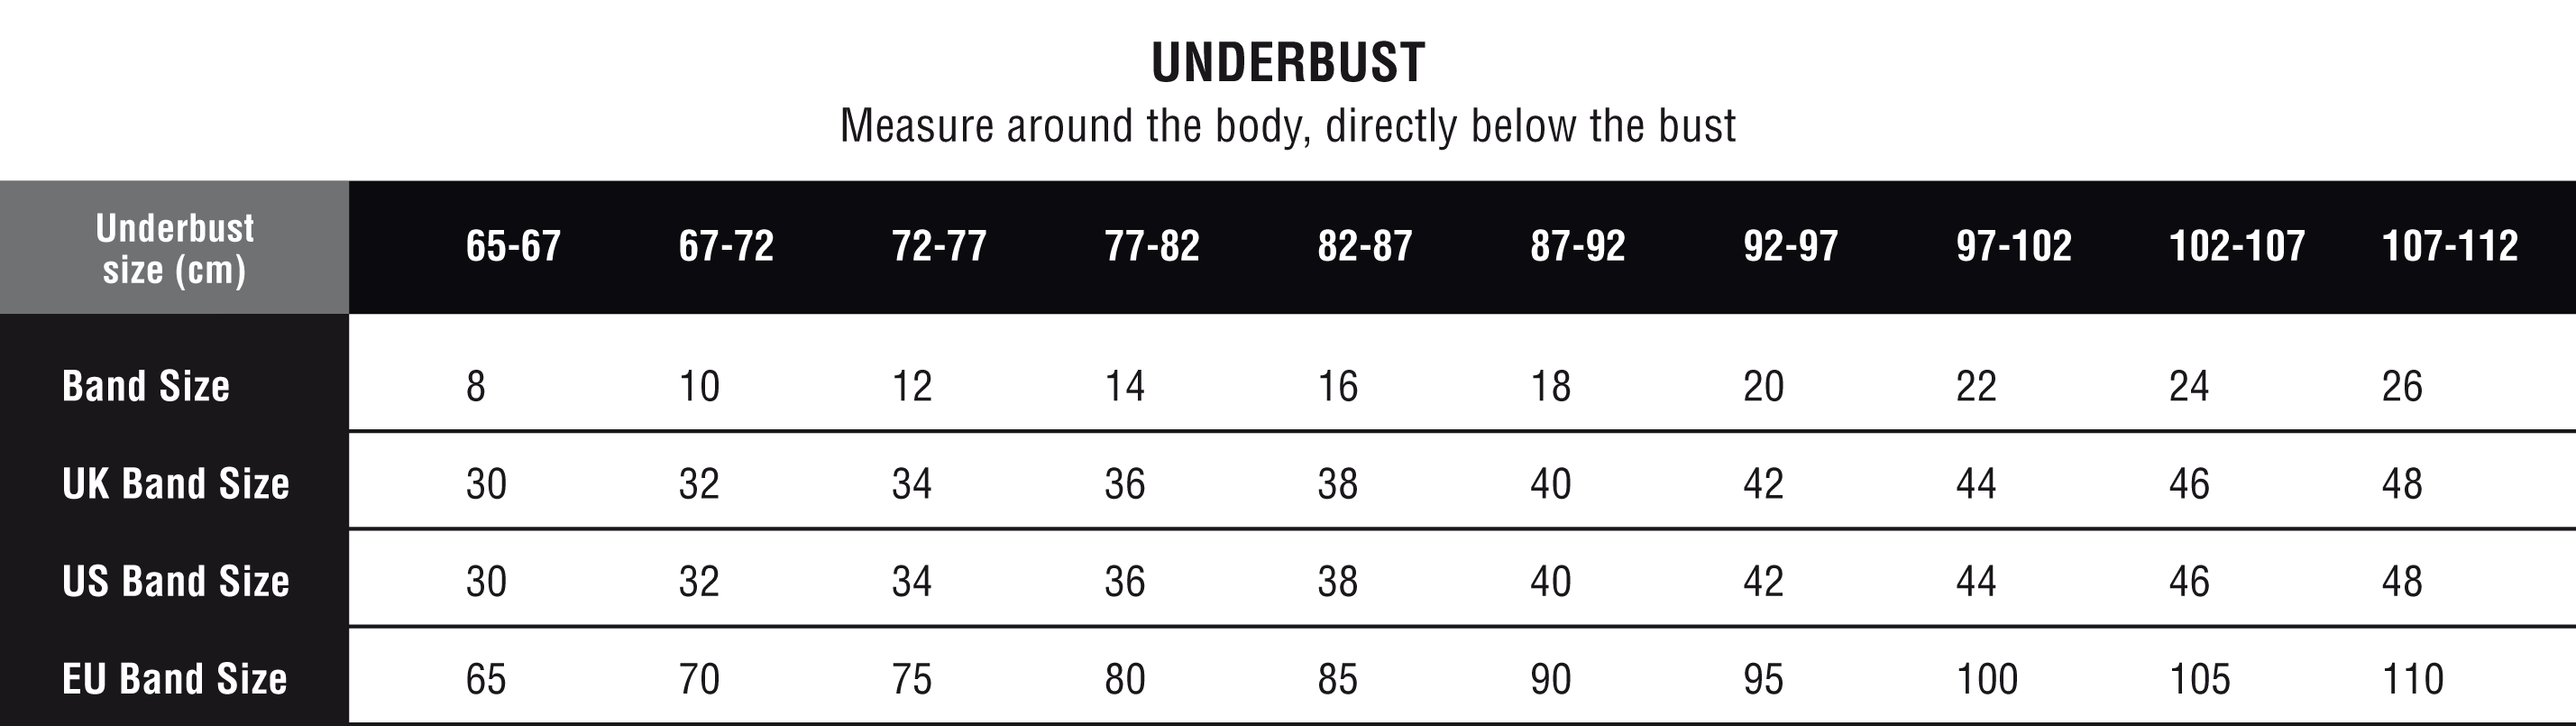 underbust fitting chart